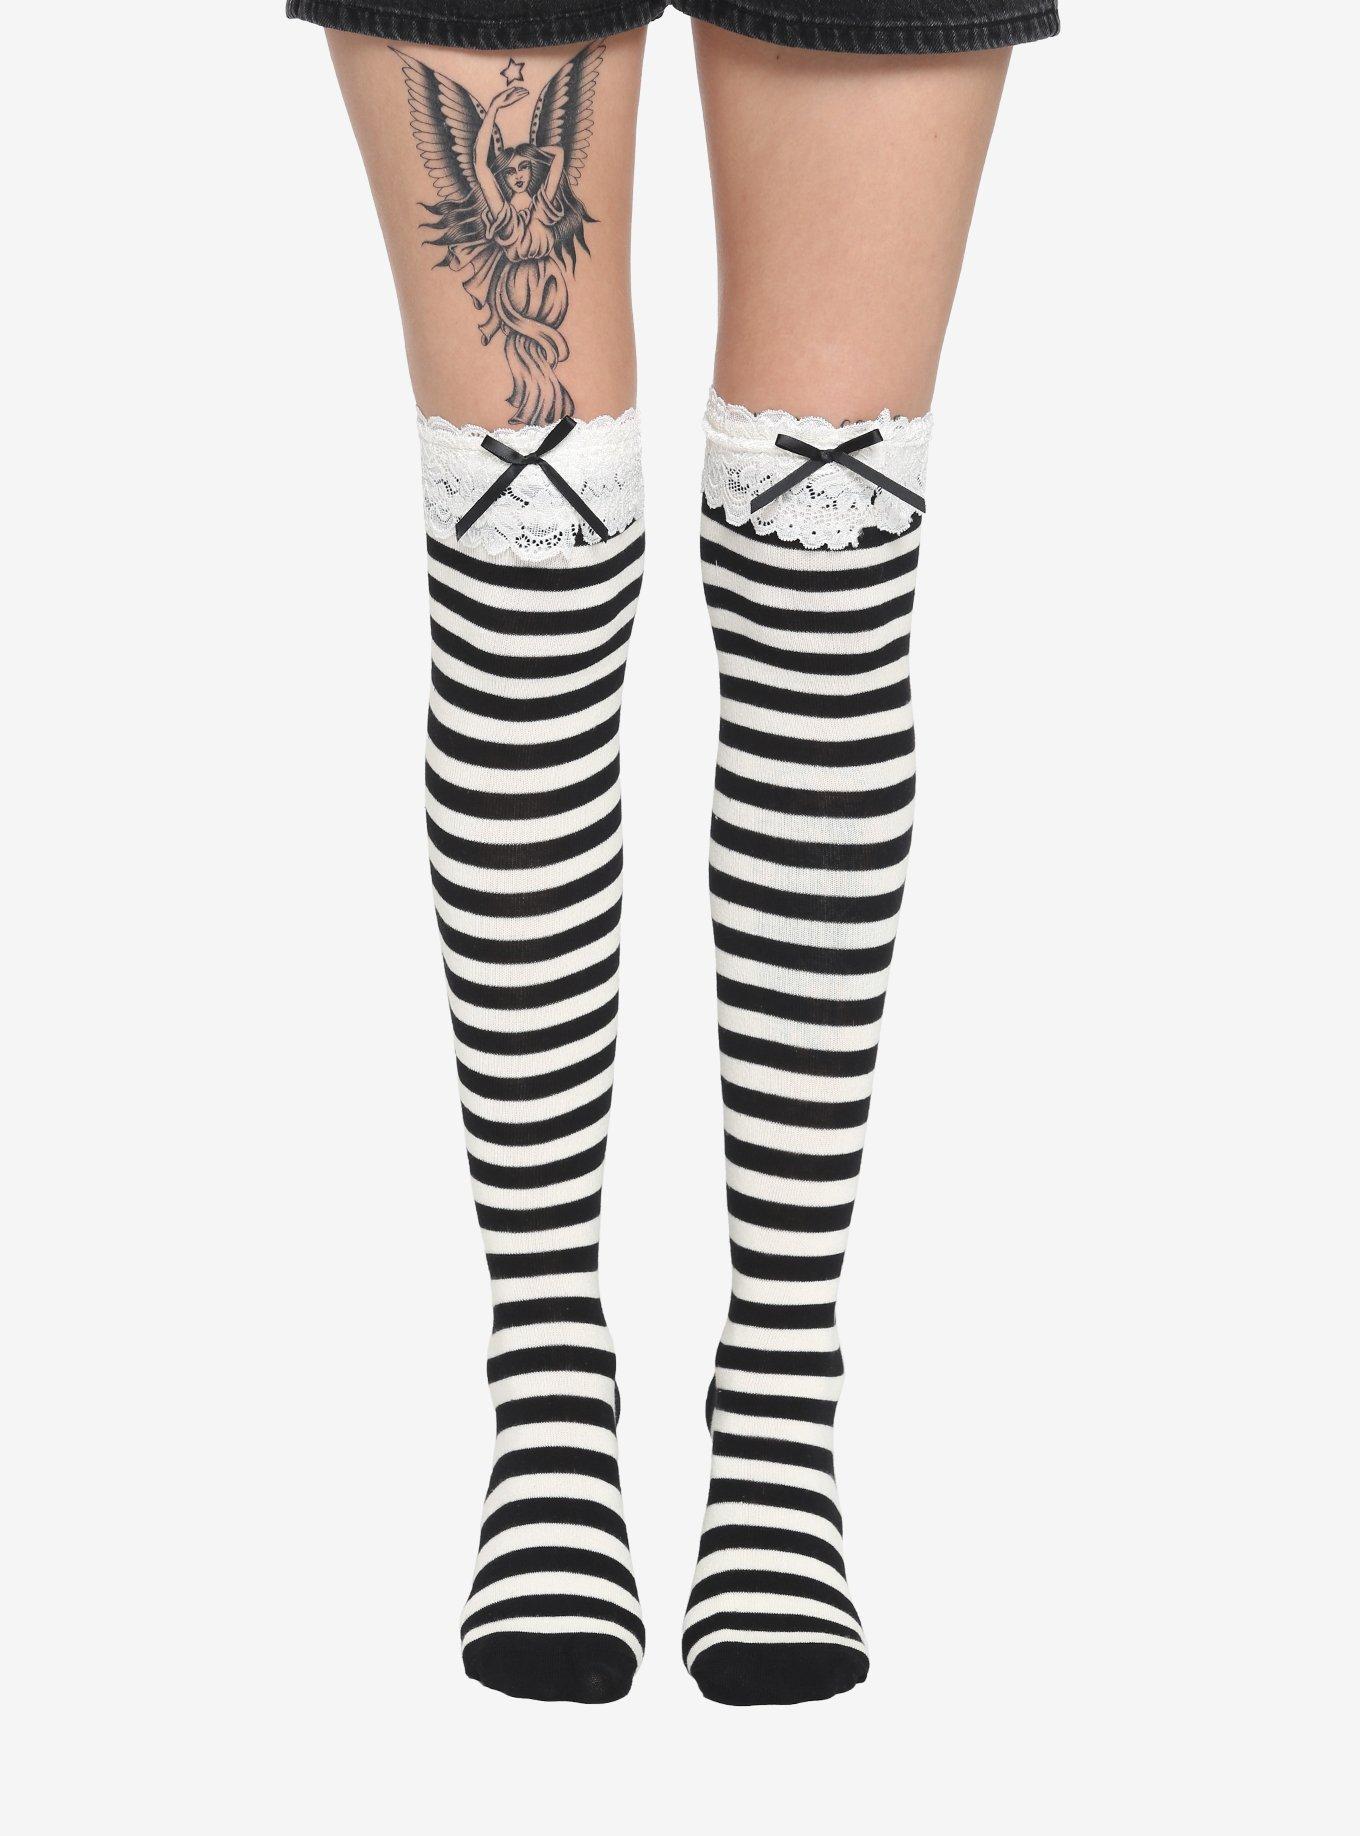 Black And Cream Stripe Lace Knee High Socks Hot Topic